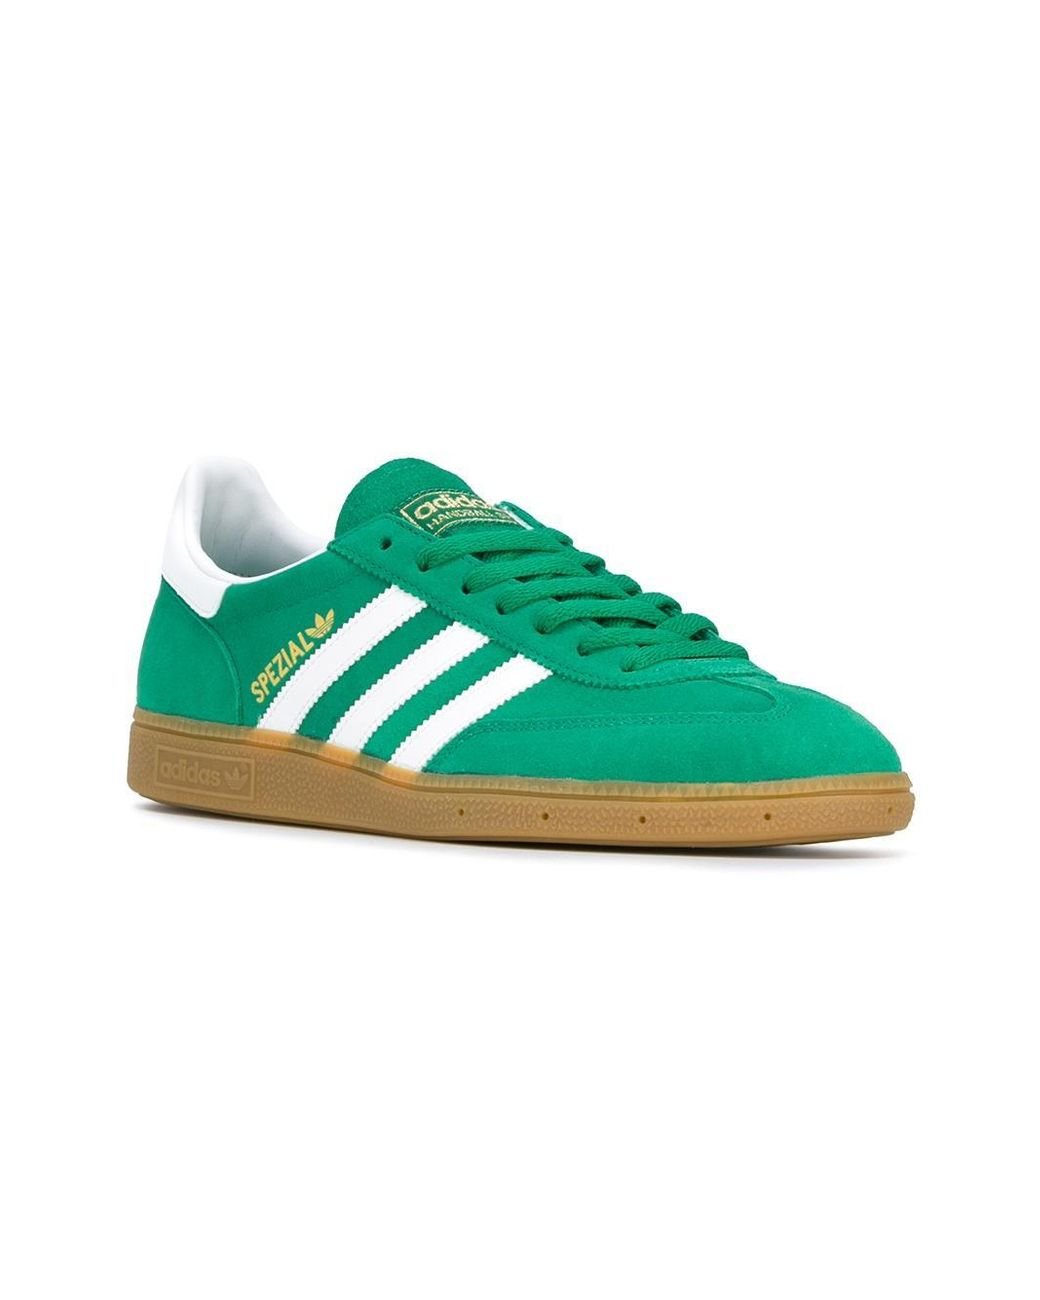 adidas Originals 'handball Spezial' Sneakers in Green for Men | Lyst